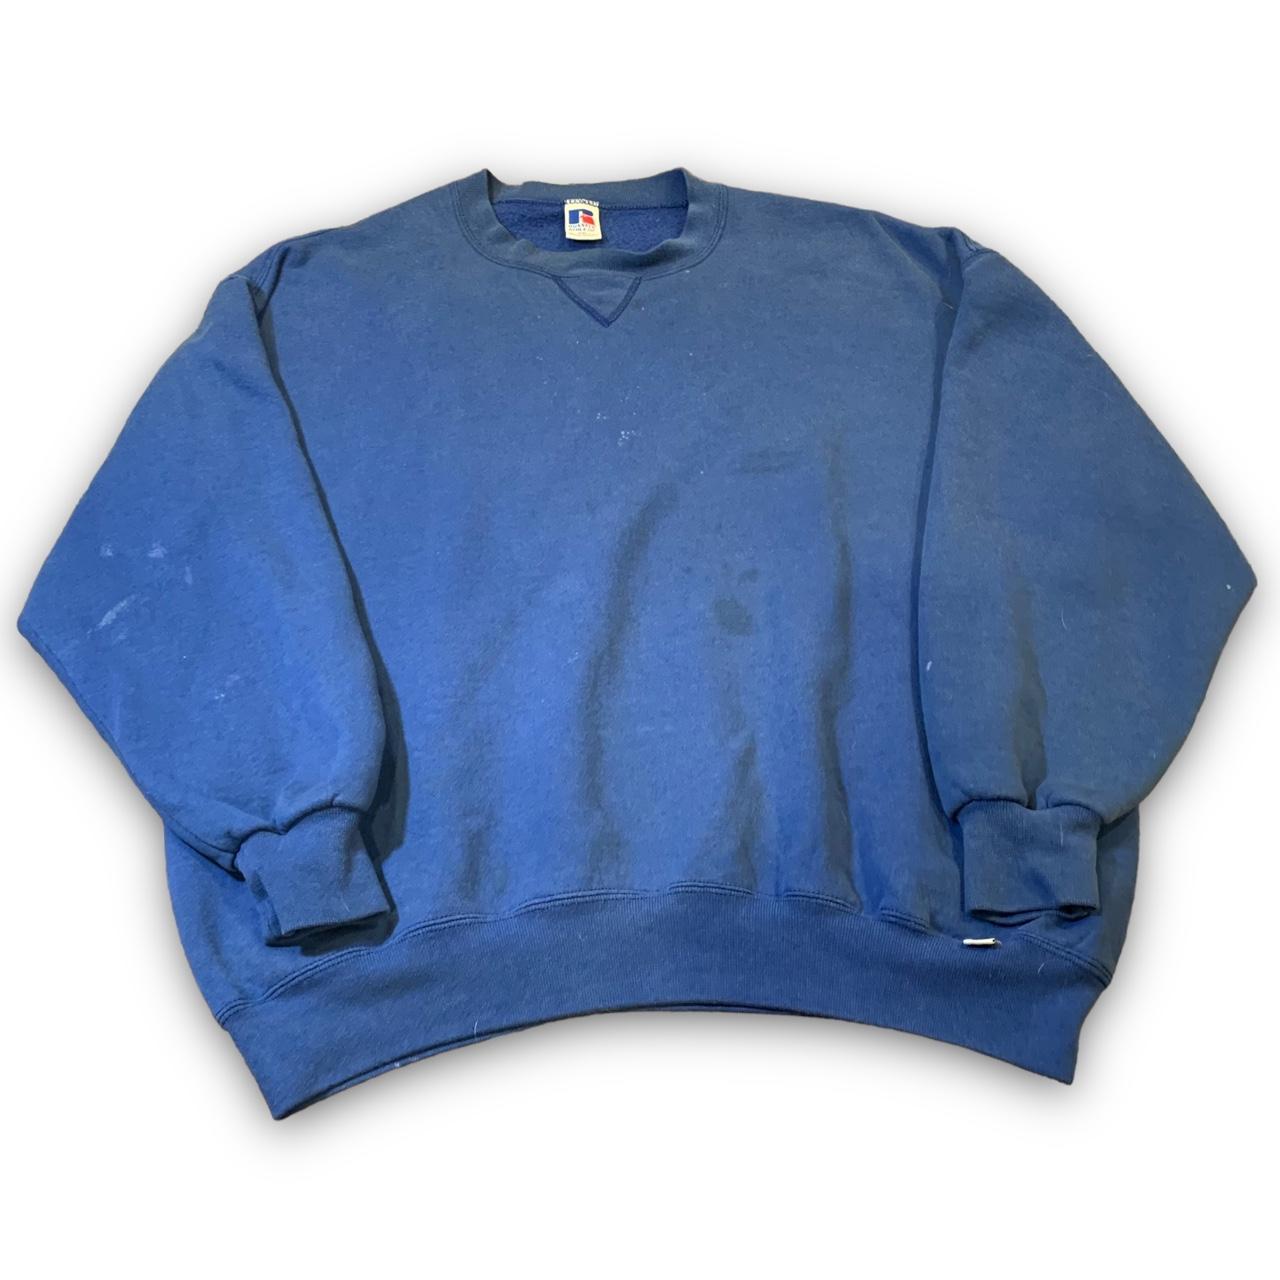 Russell Athletic Men's Blue Sweatshirt